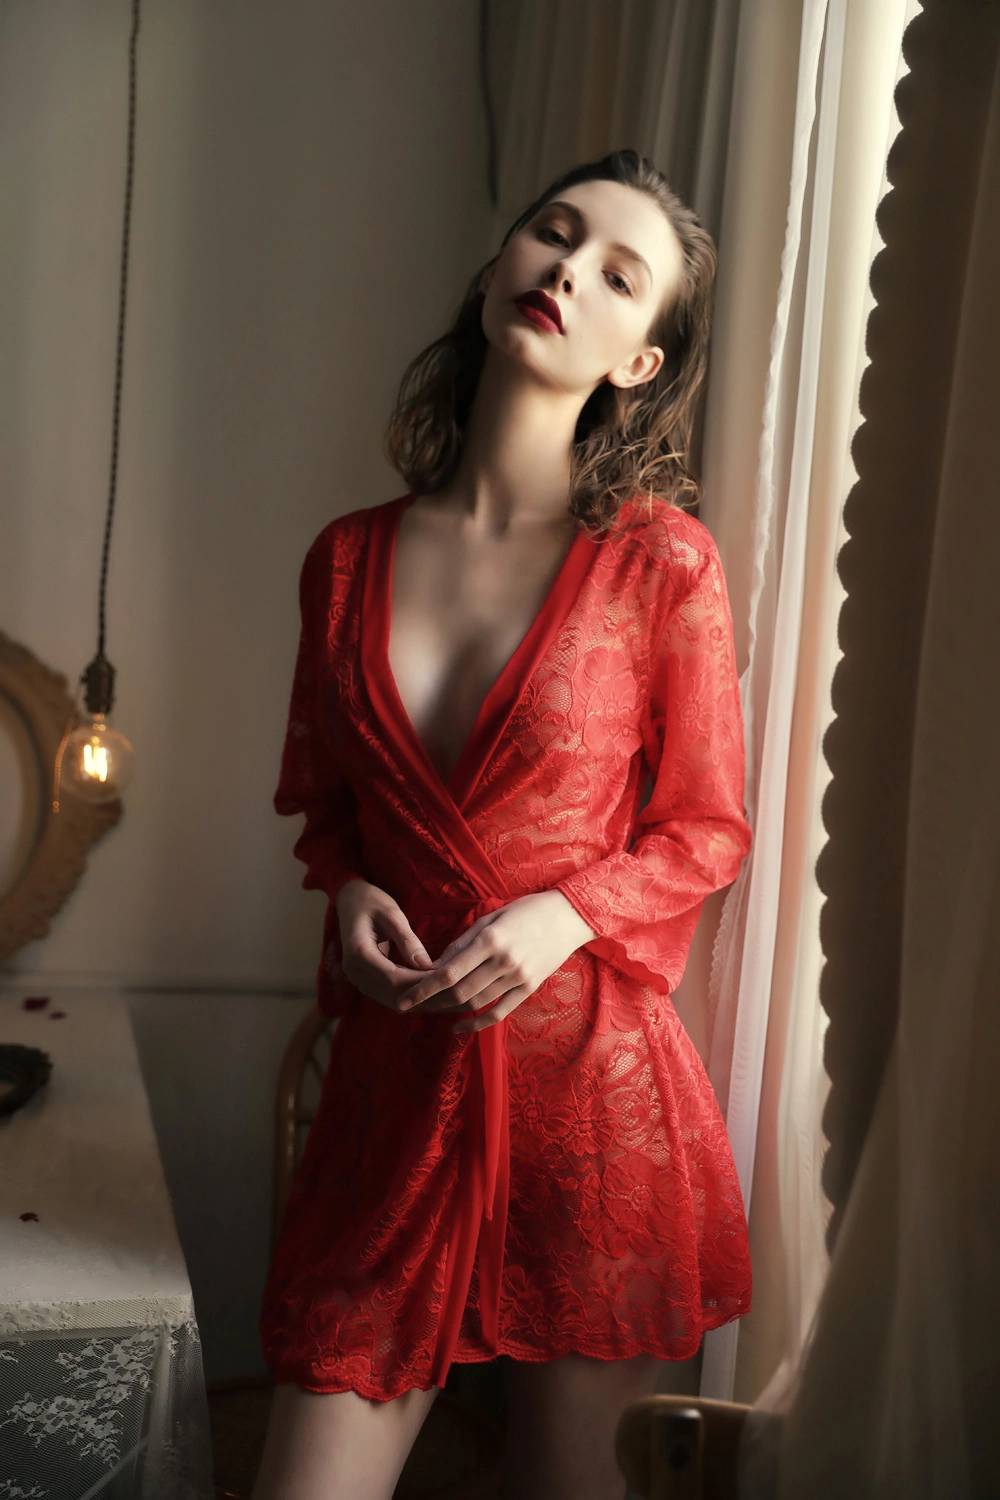 V Gets Sex Appeal Temptation of Silk Nightgown of Appeal Pajamas Half Through Sleep Skirt